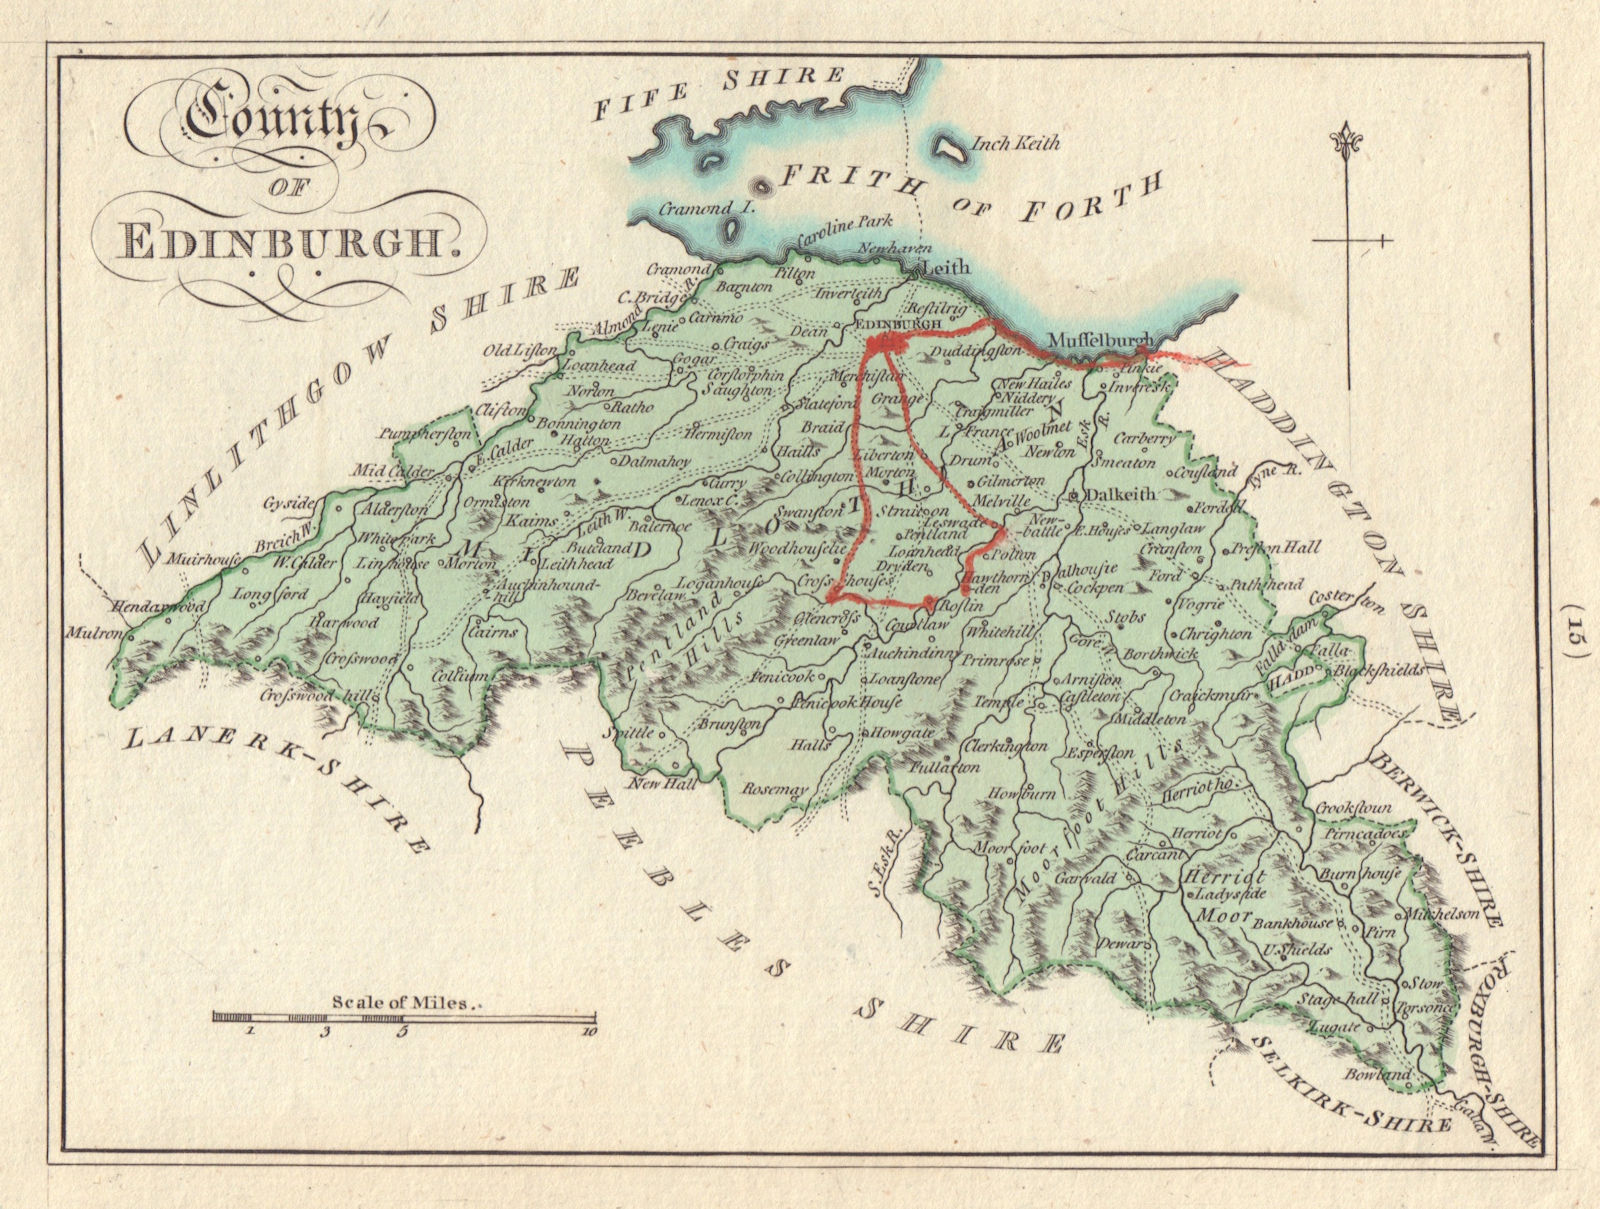 Associate Product County of Edinburgh. Edinburghshire / Midlothian. SAYER / ARMSTRONG 1794 map